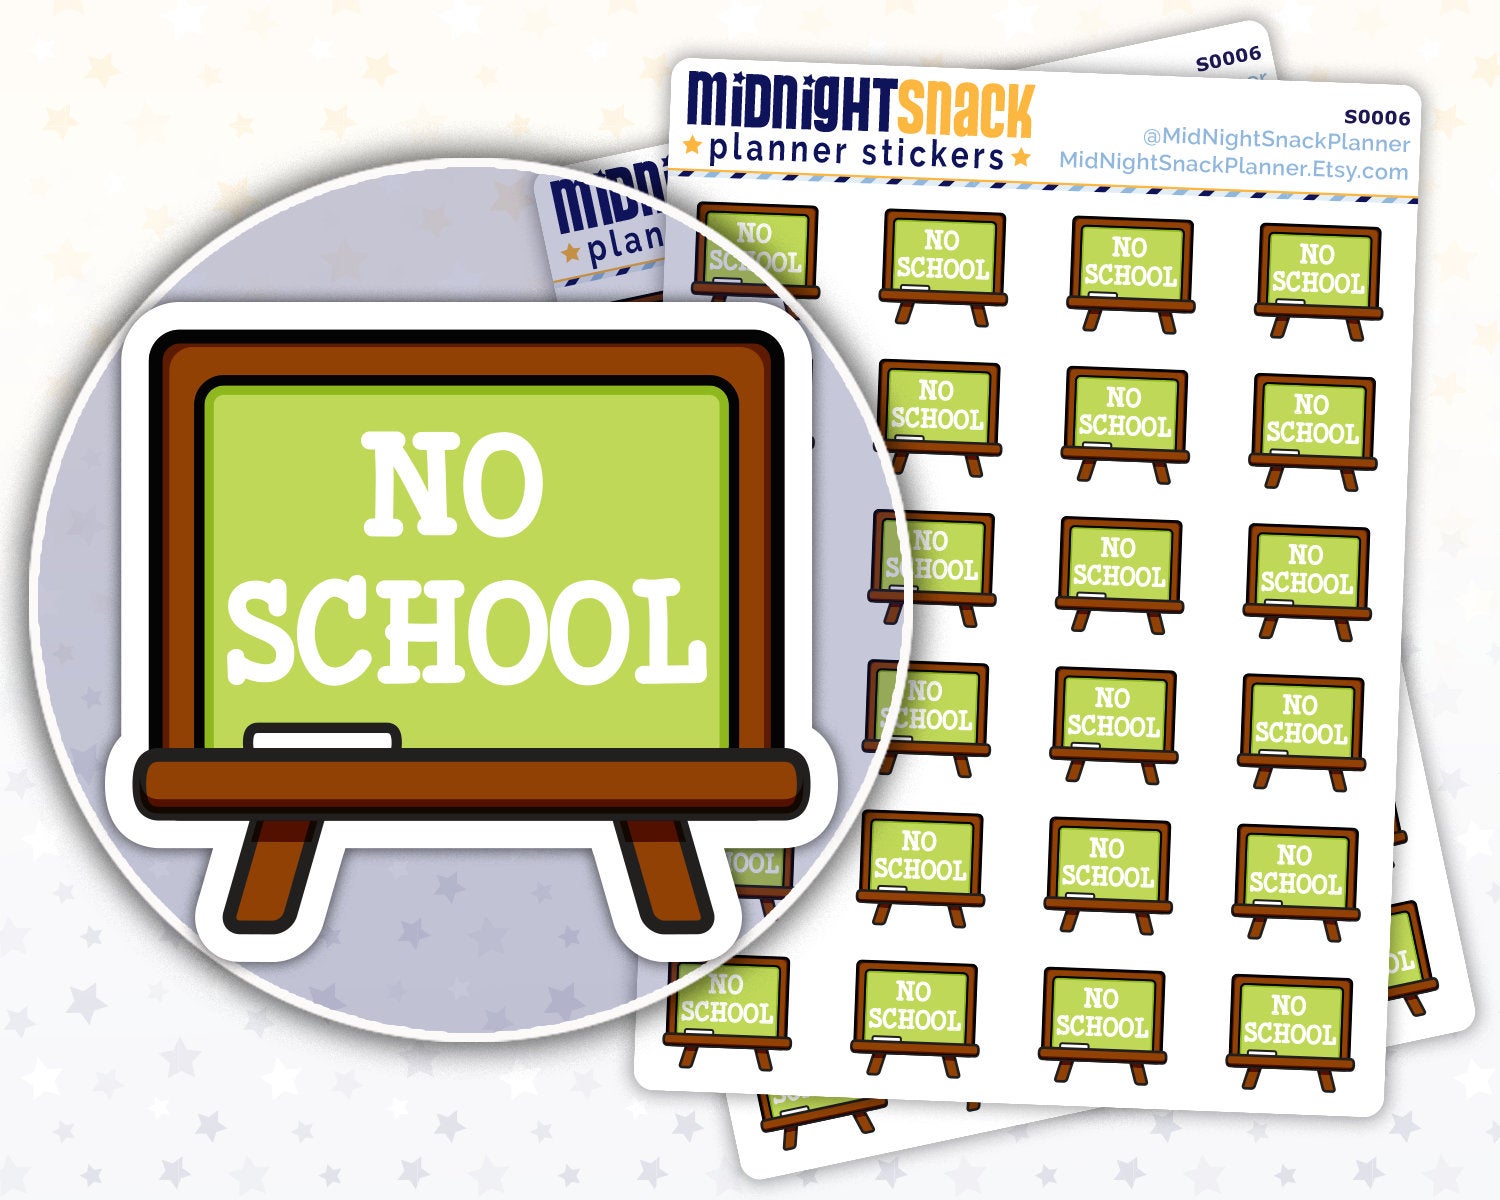 No School Planner Stickers from Midnight Snack Planner